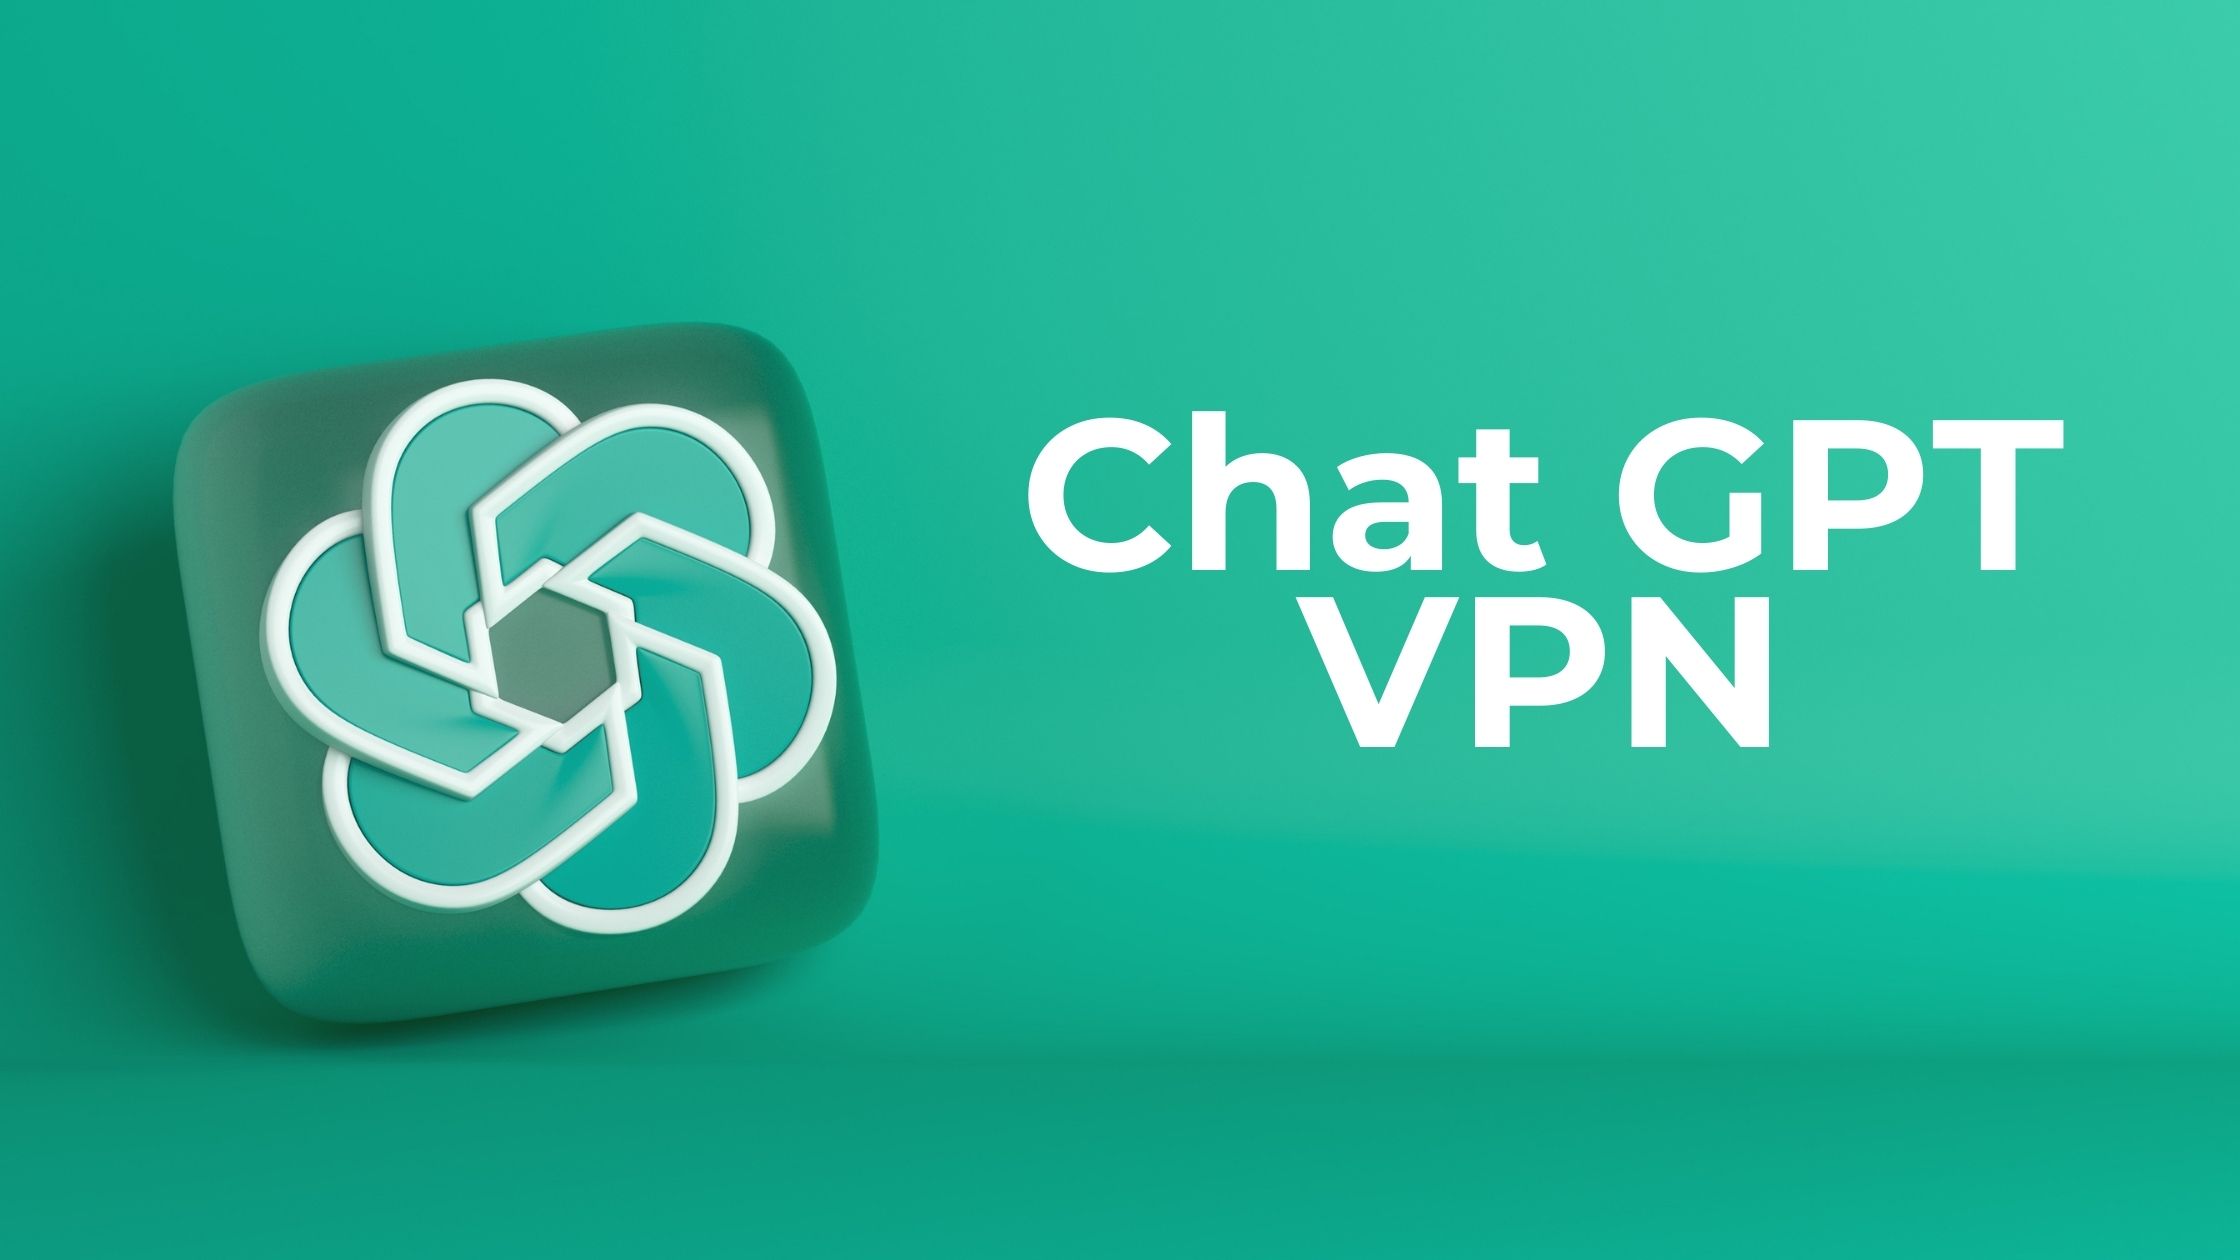 ChatGPT VPN